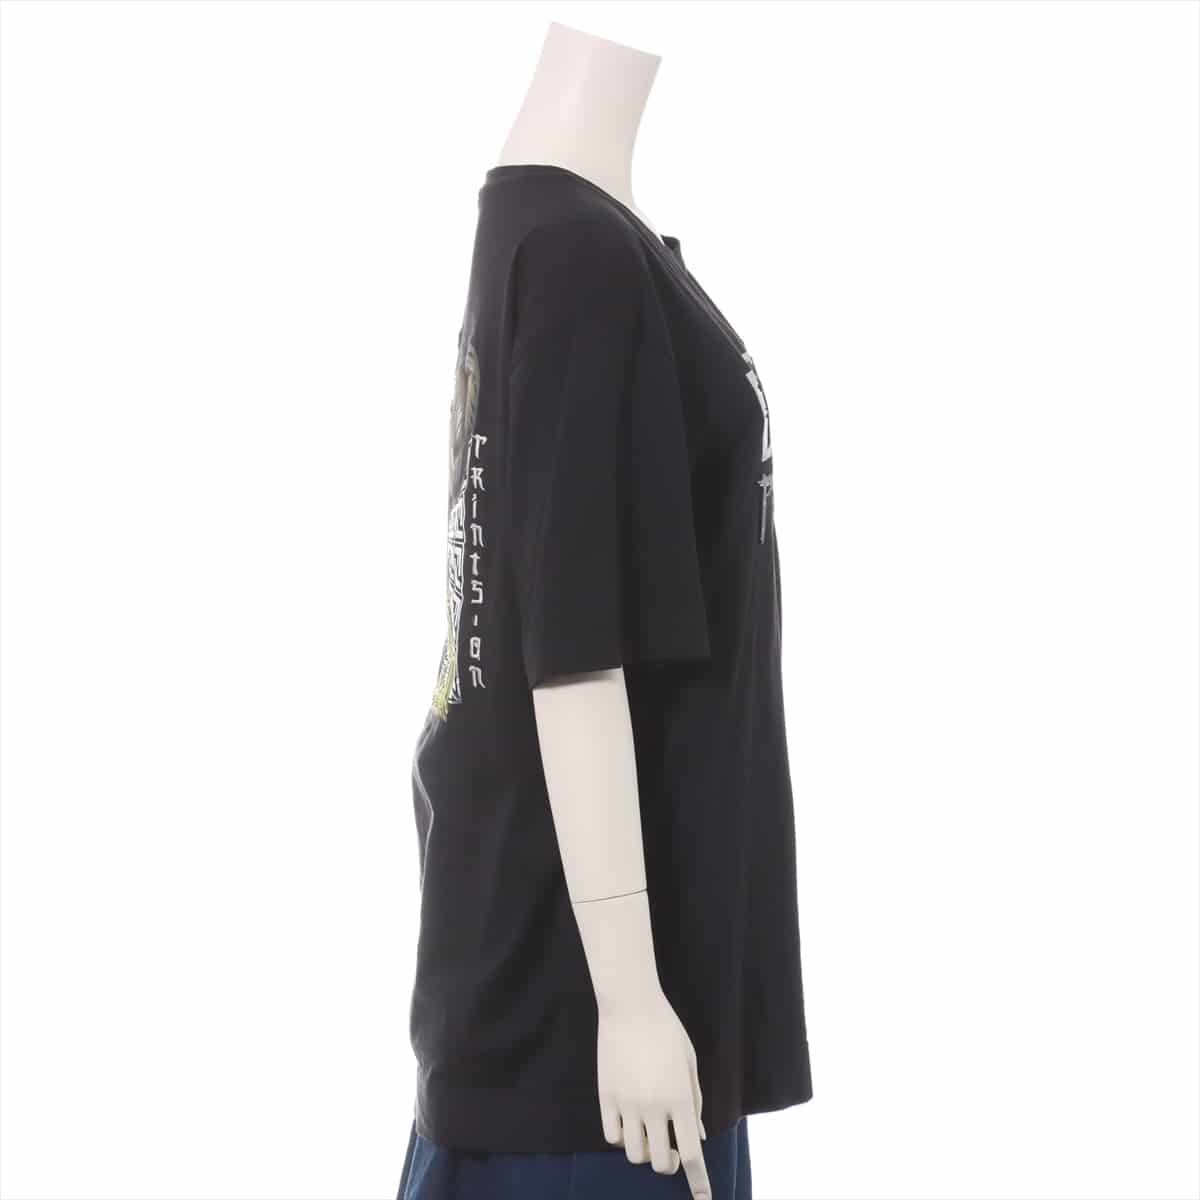 Fendi Cotton T-shirt M Ladies' Black  PRINTS ON Nicky Minaj There are threads, perfume leftovers, and holes